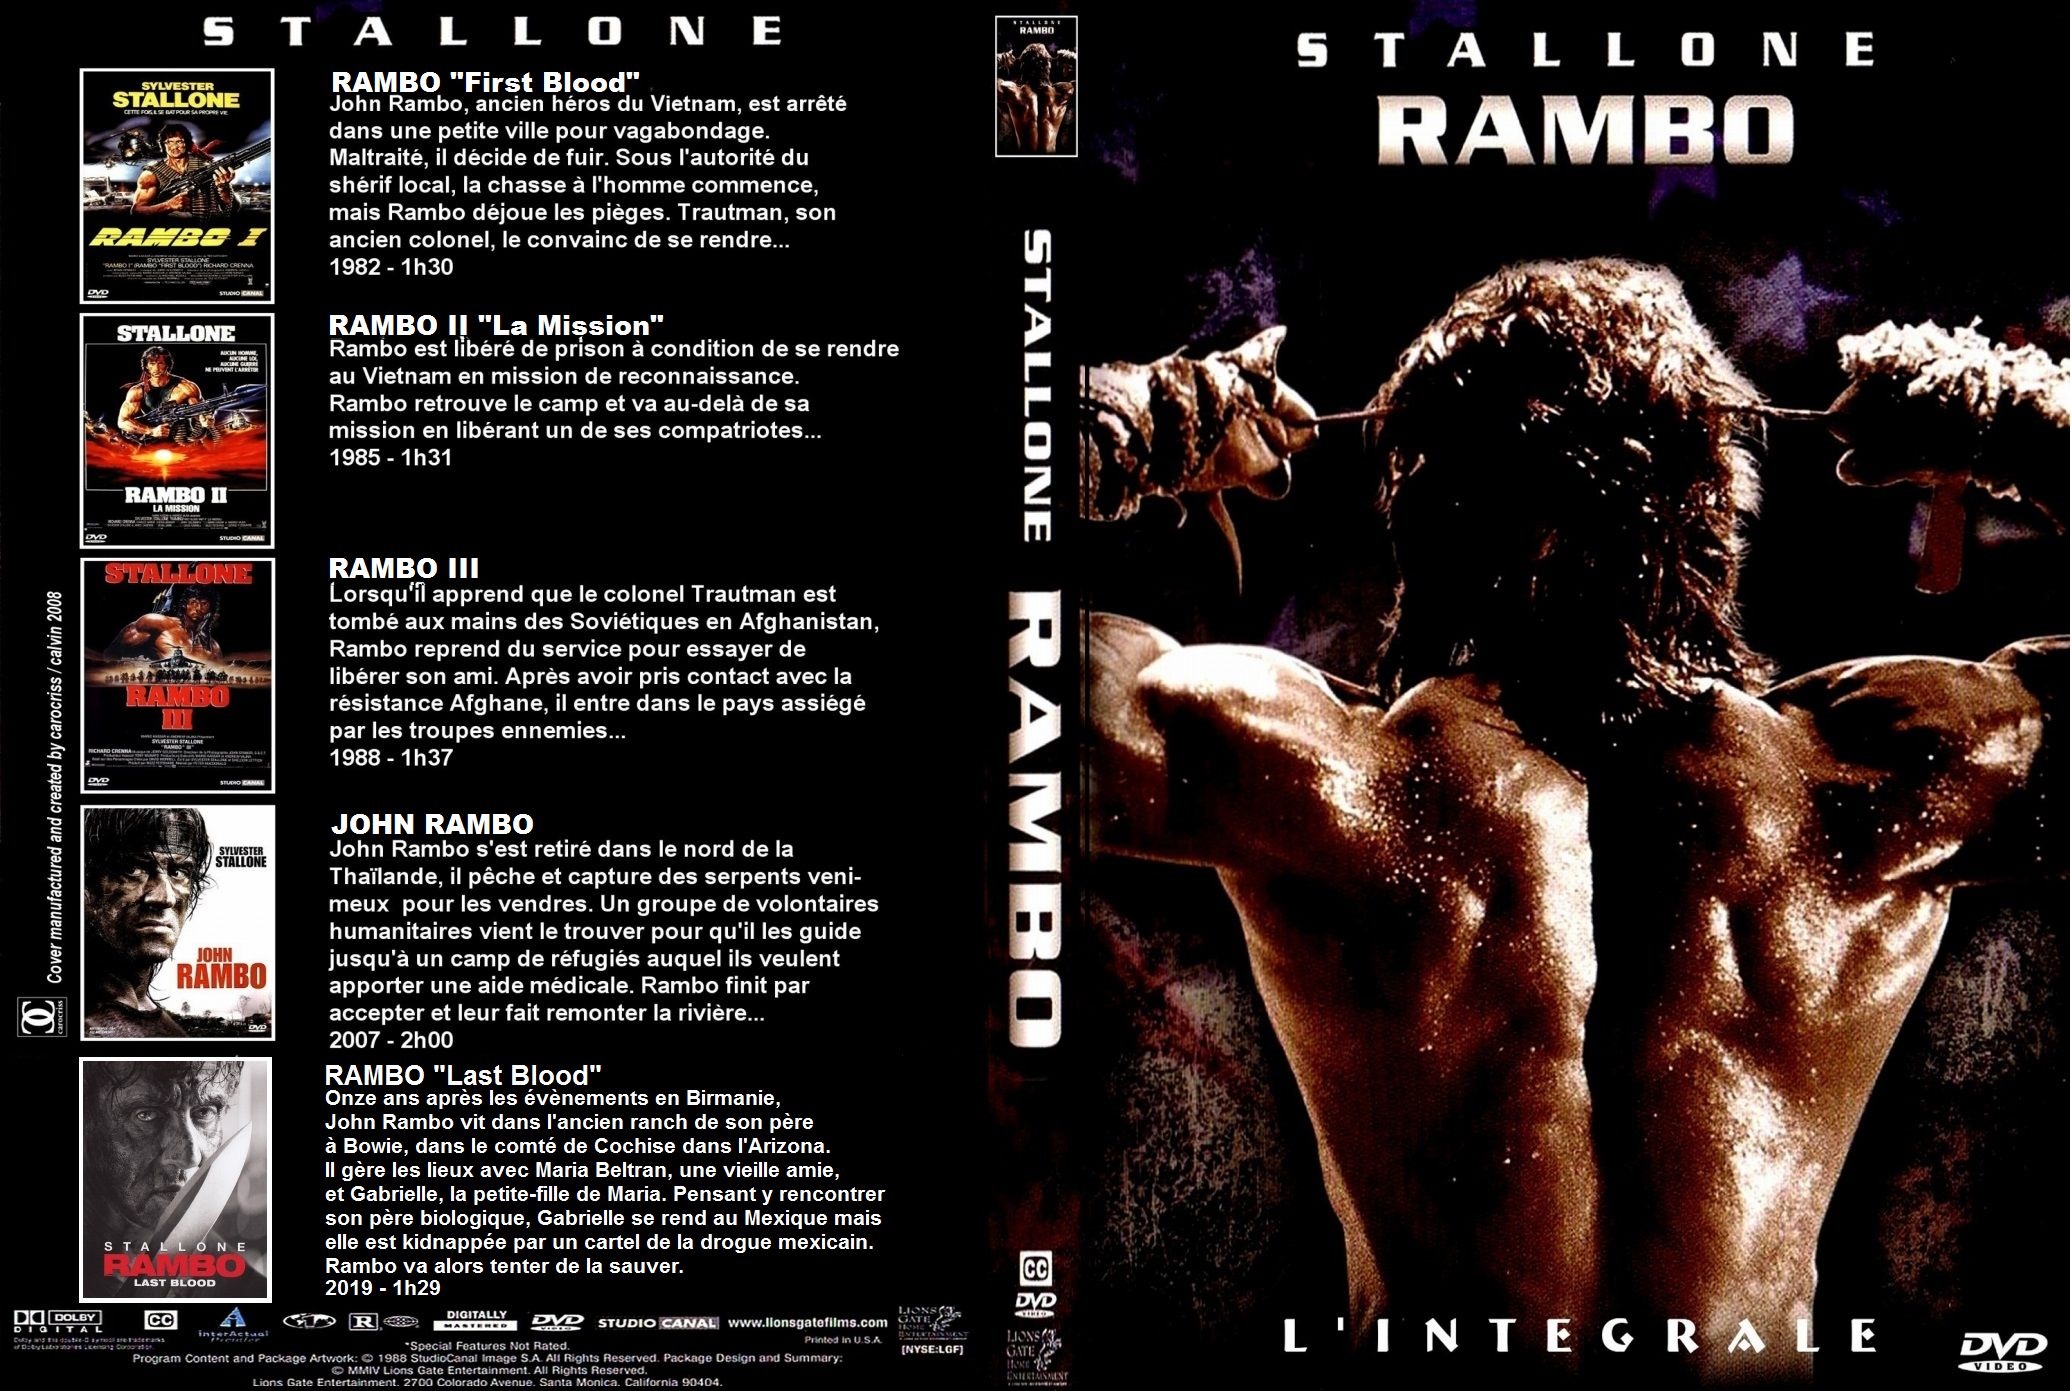 Jaquette DVD Rambo integrales 5 films Custom 